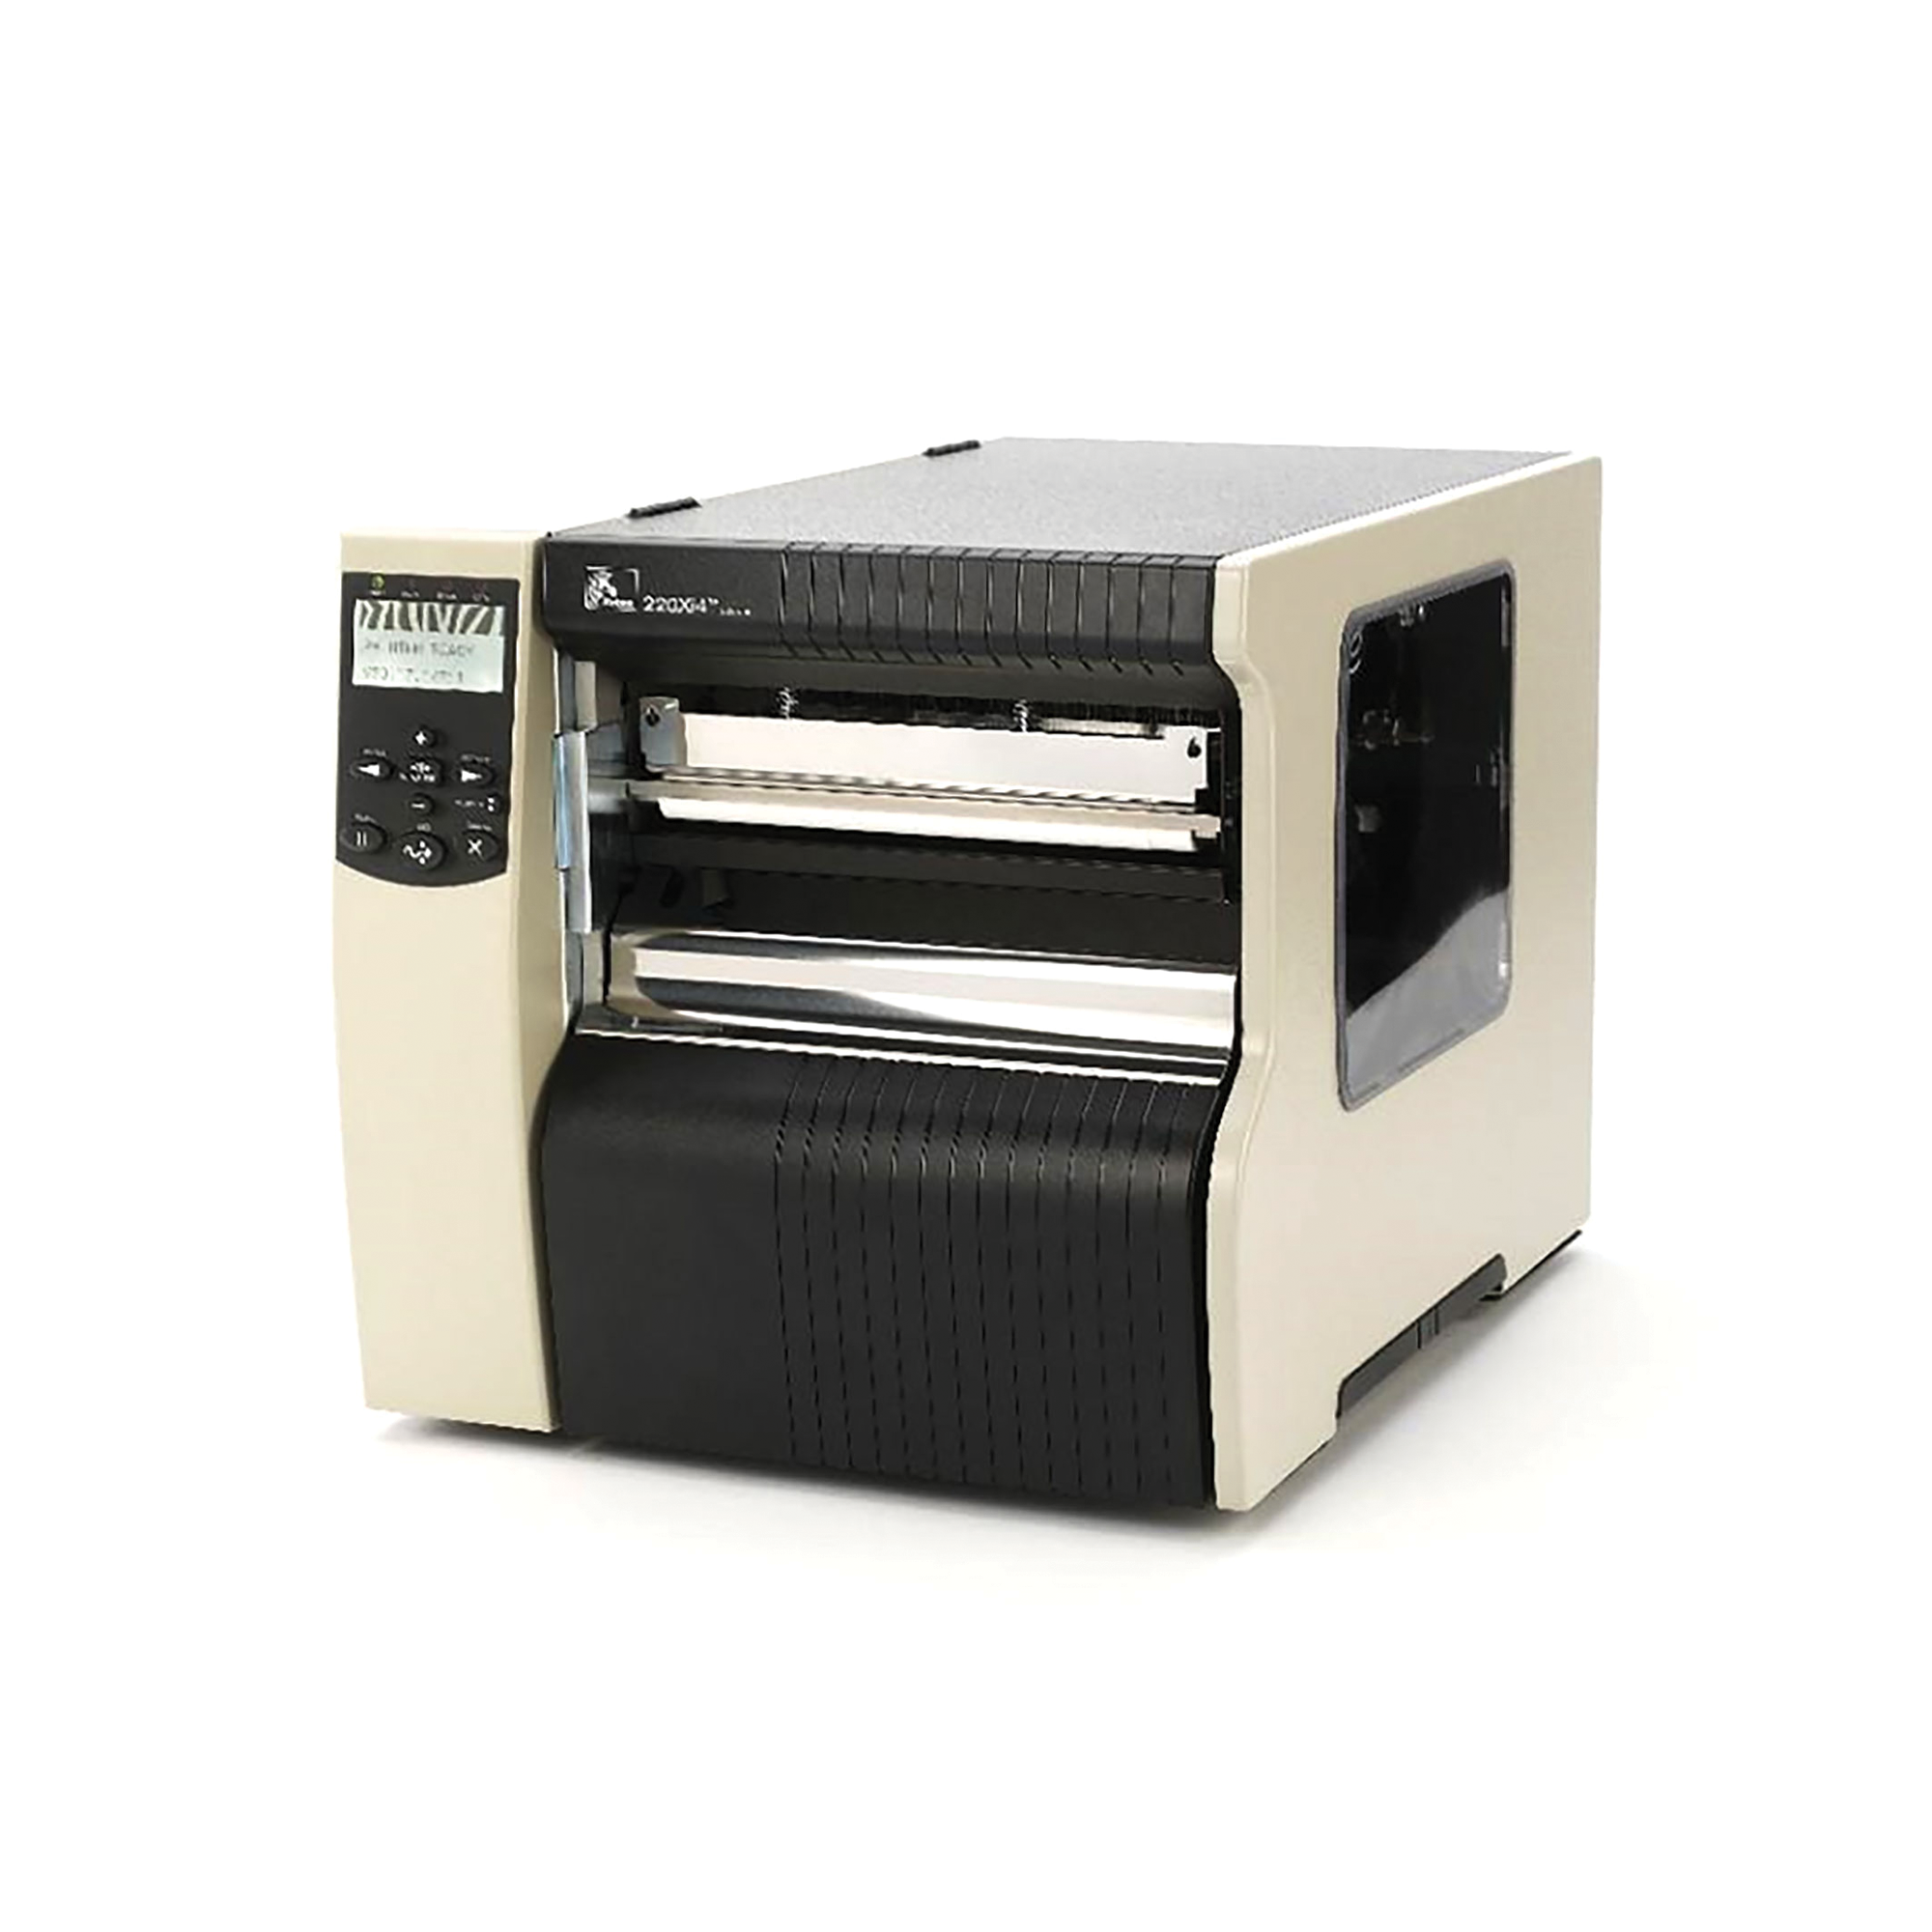 Zebra 220Xi4 Thermal Transfer Printer - 300dpi, US Cord, Serial, Parallel, USB, Int 10/100, Rewind with Peel - MPN: 223-801-00200